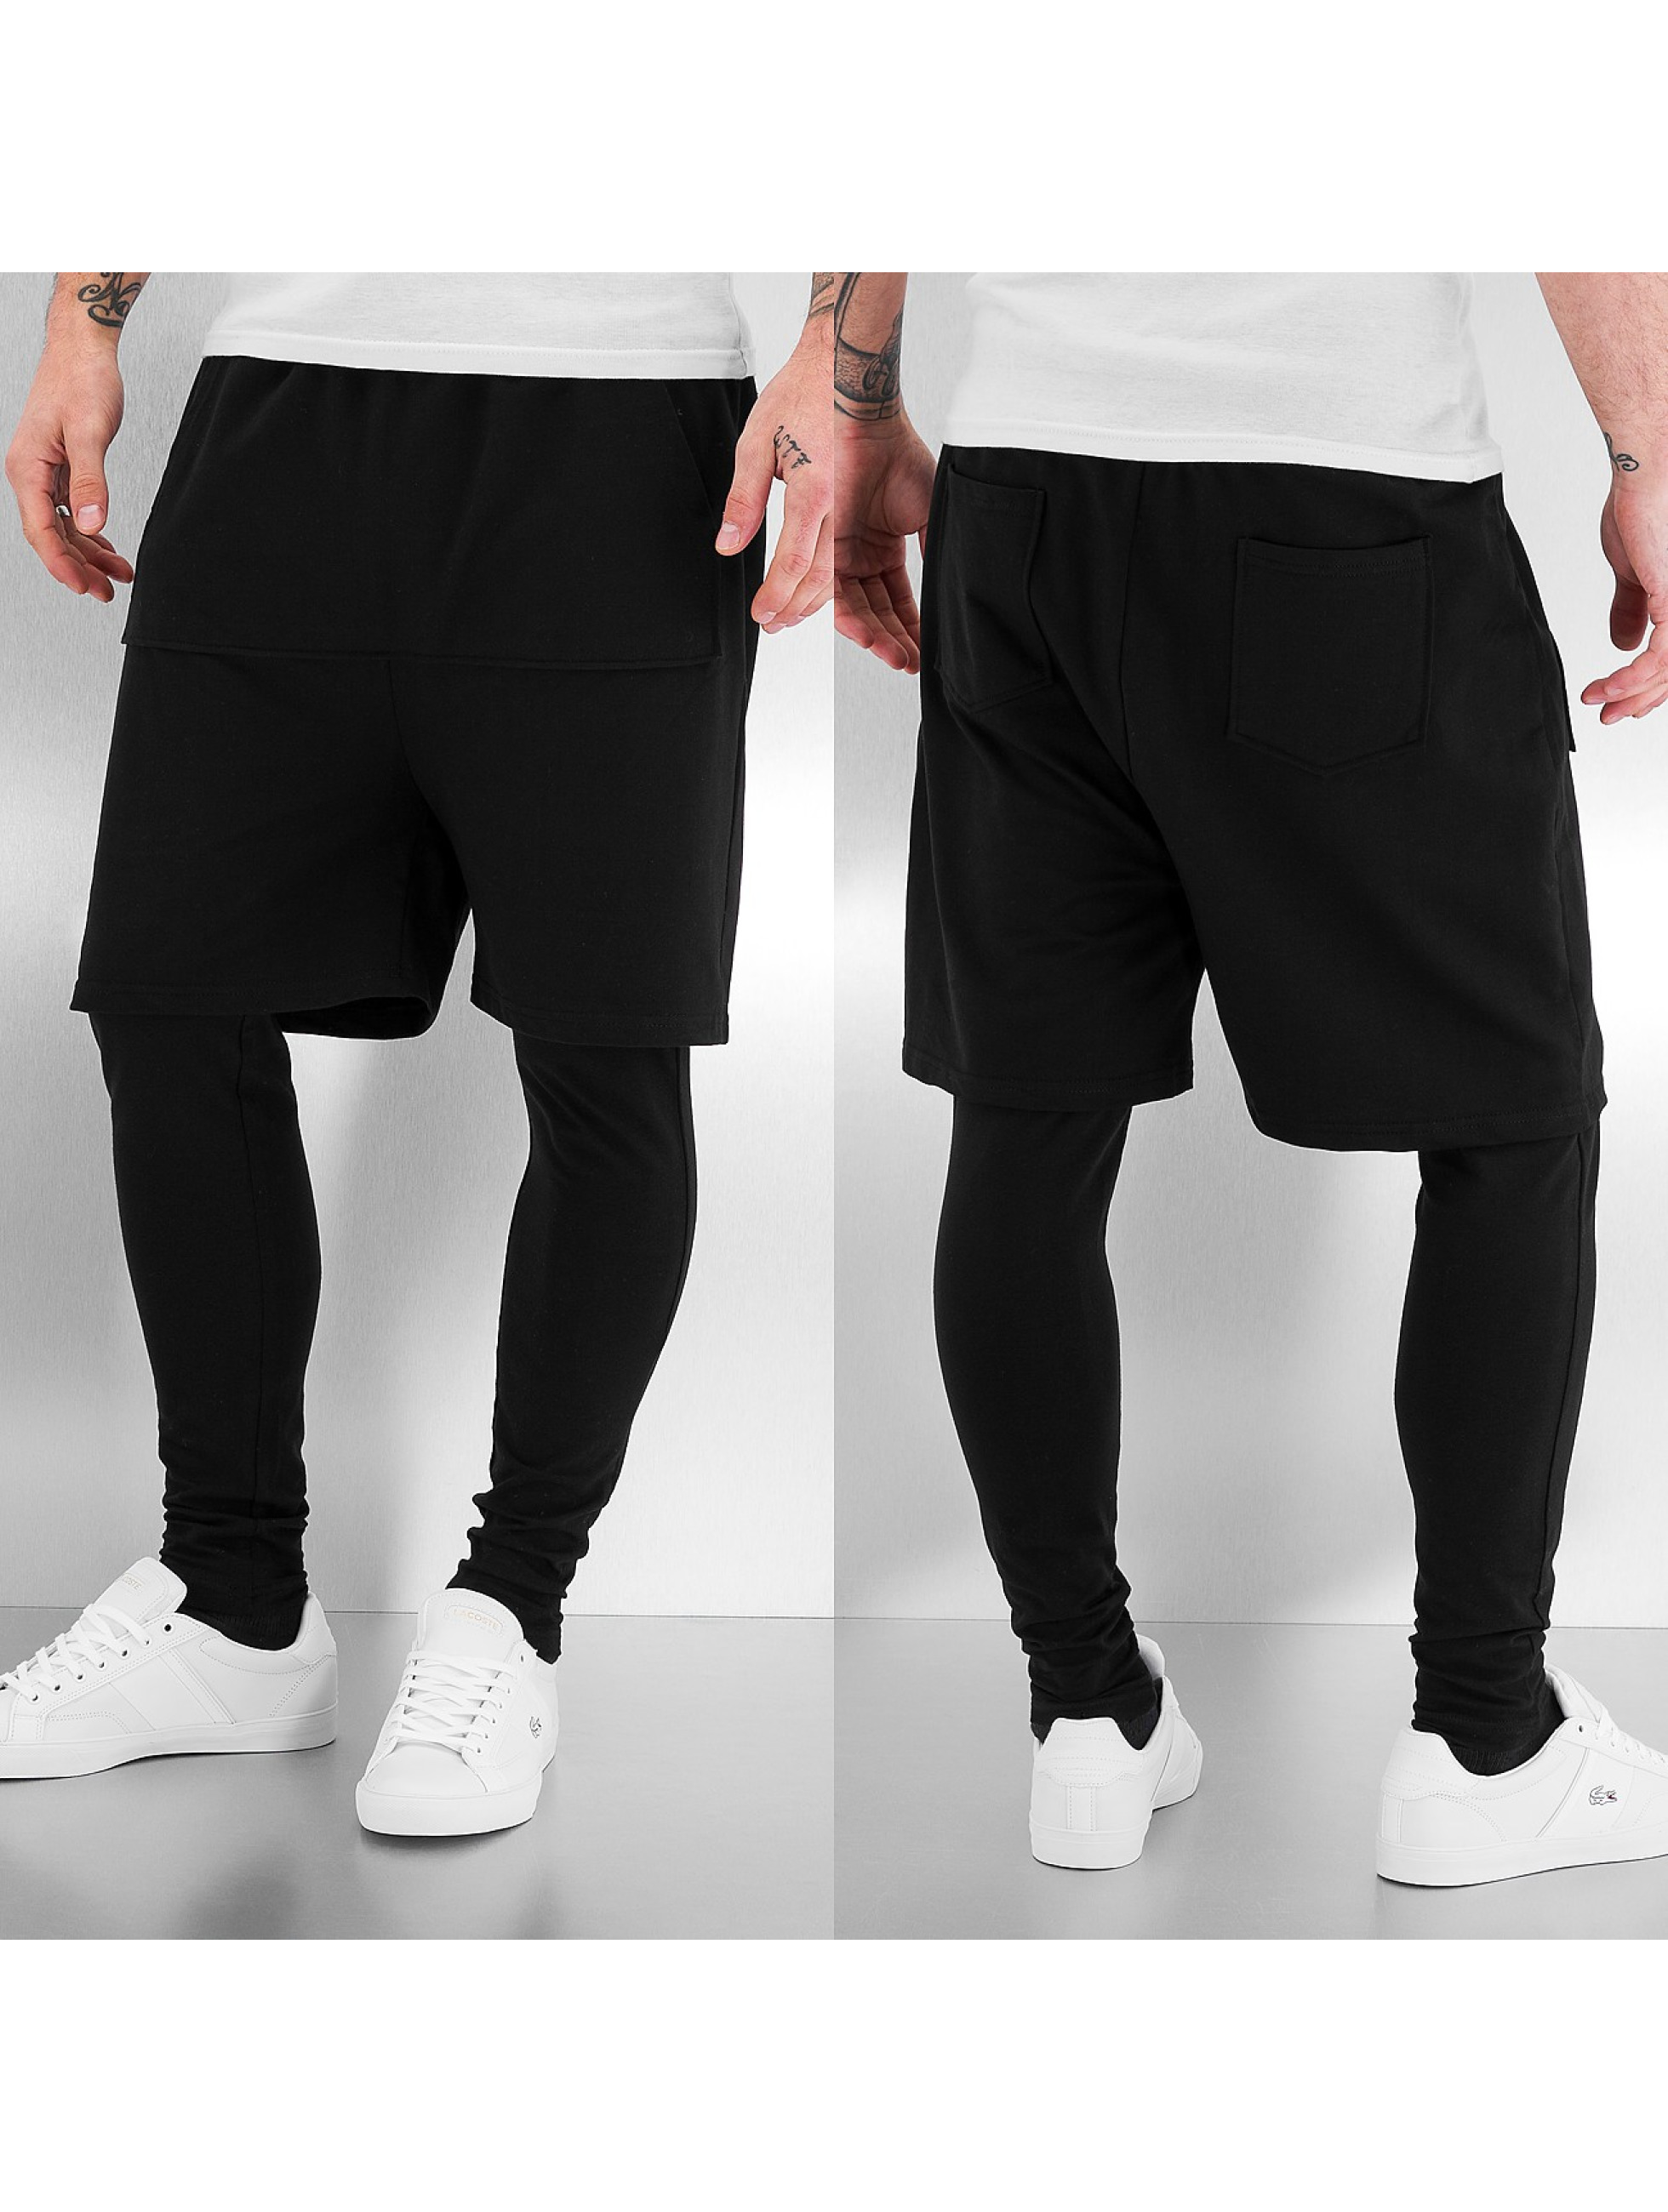 Shorts 2 in 1 Leggings in schwarz